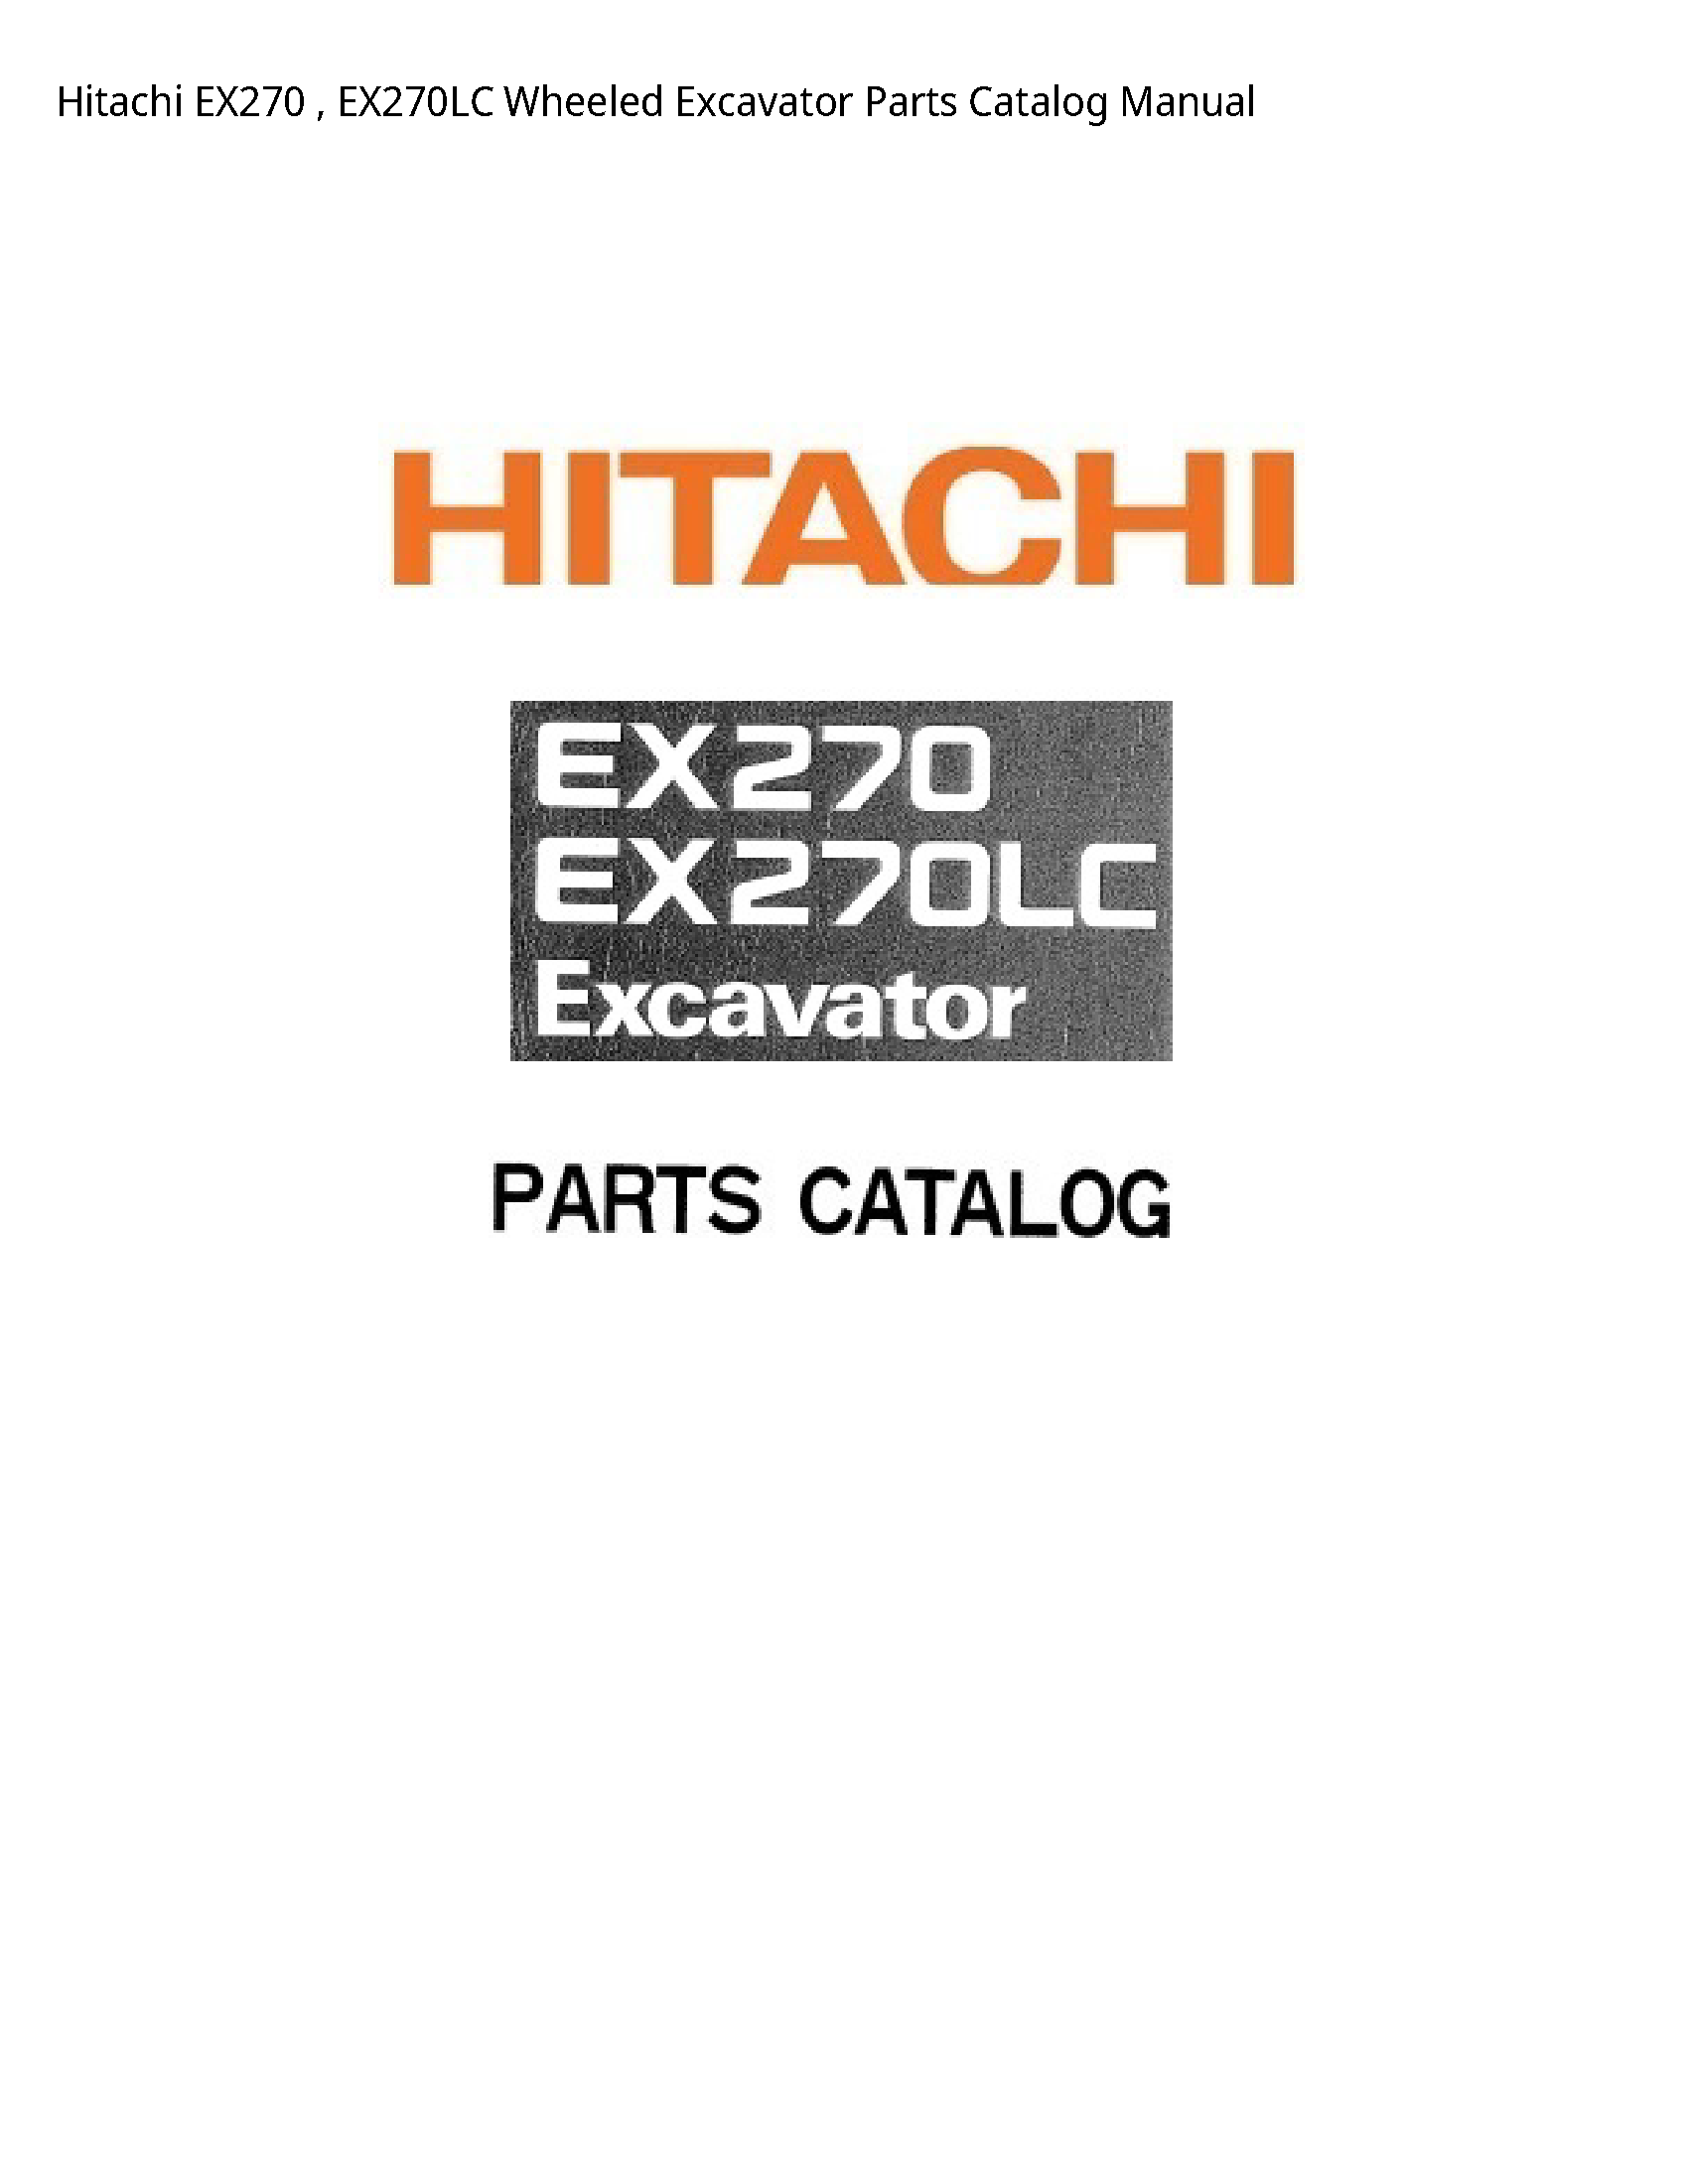 Hitachi EX270 Wheeled Excavator Parts Catalog manual